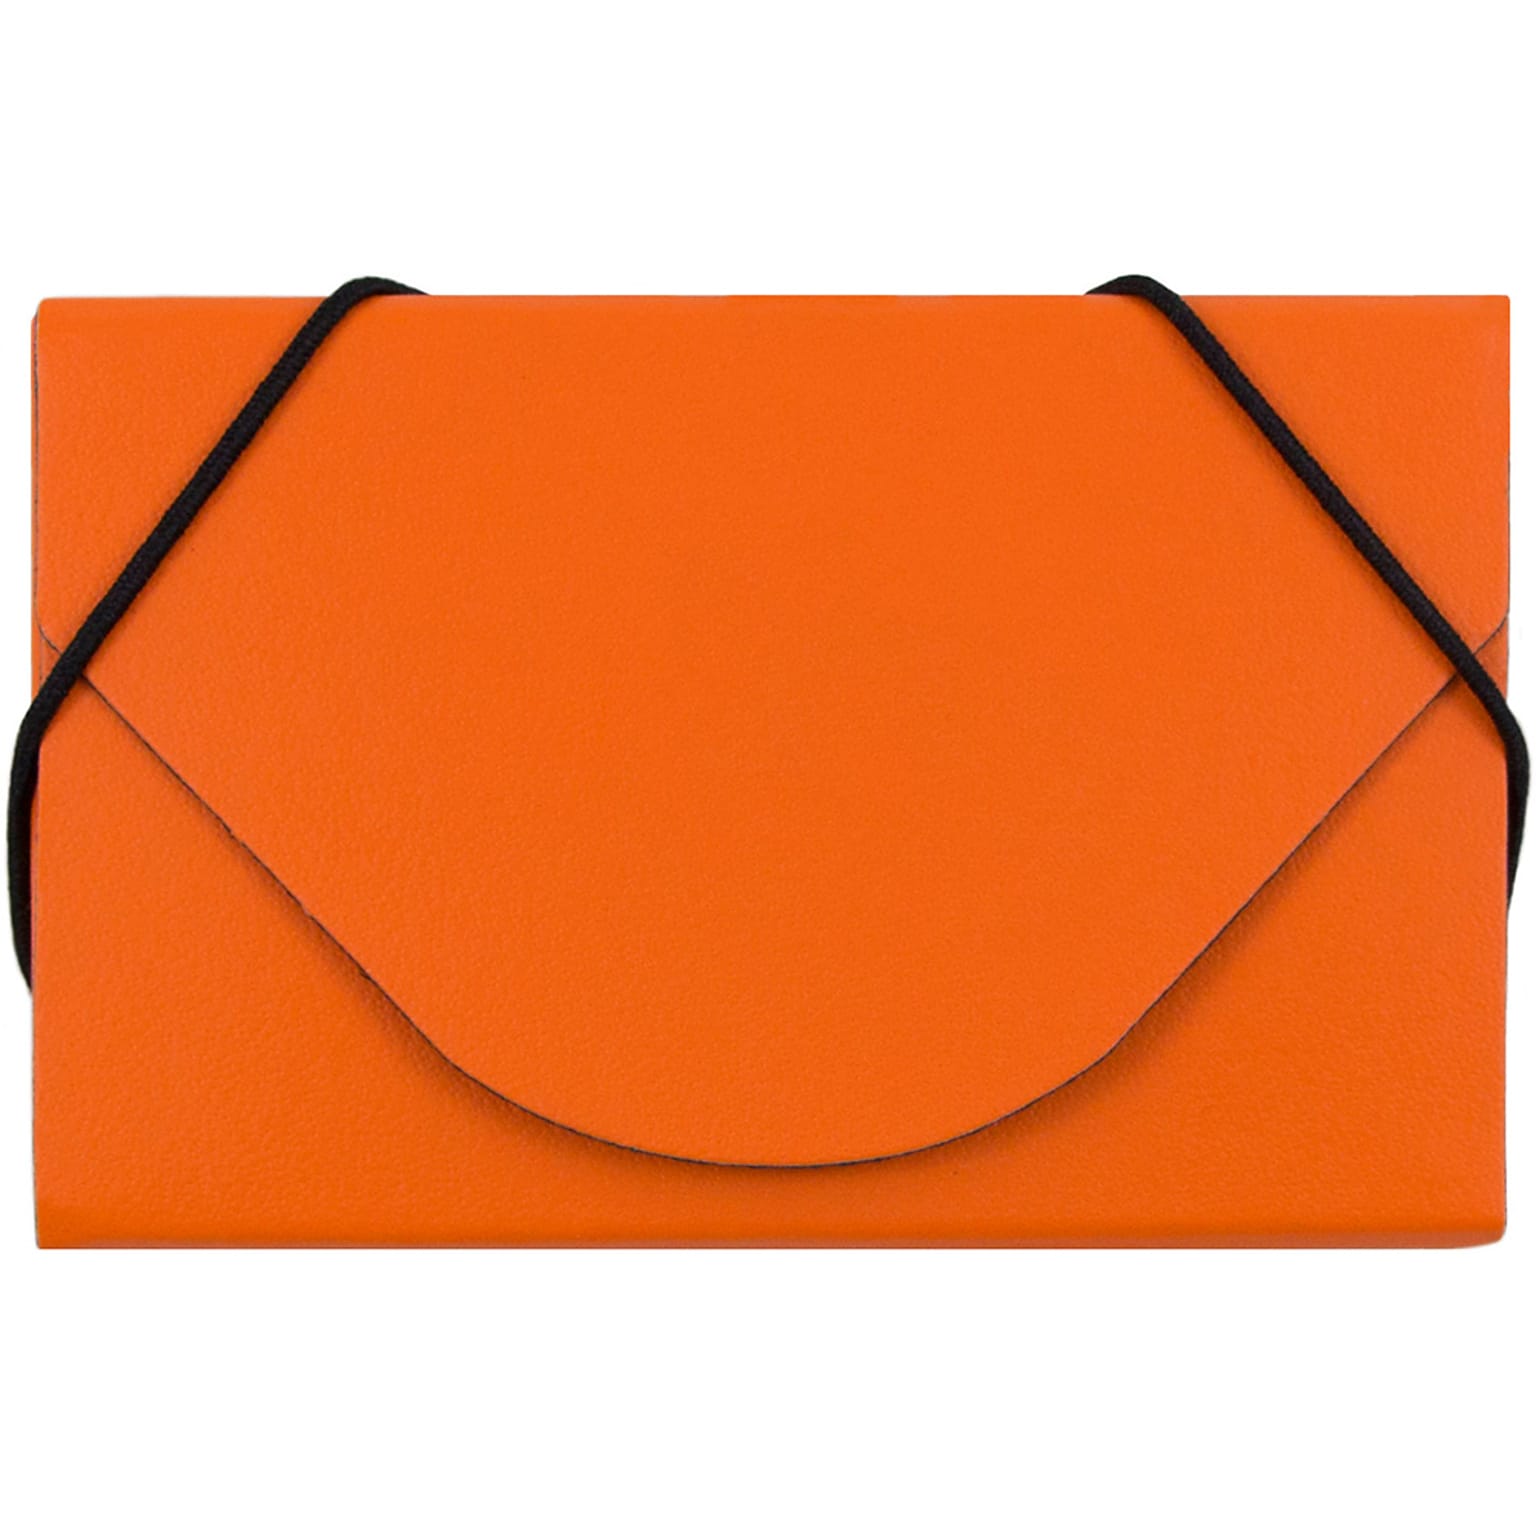 JAM PAPER Matte Business Card Case with Flap, Orange (369032736)